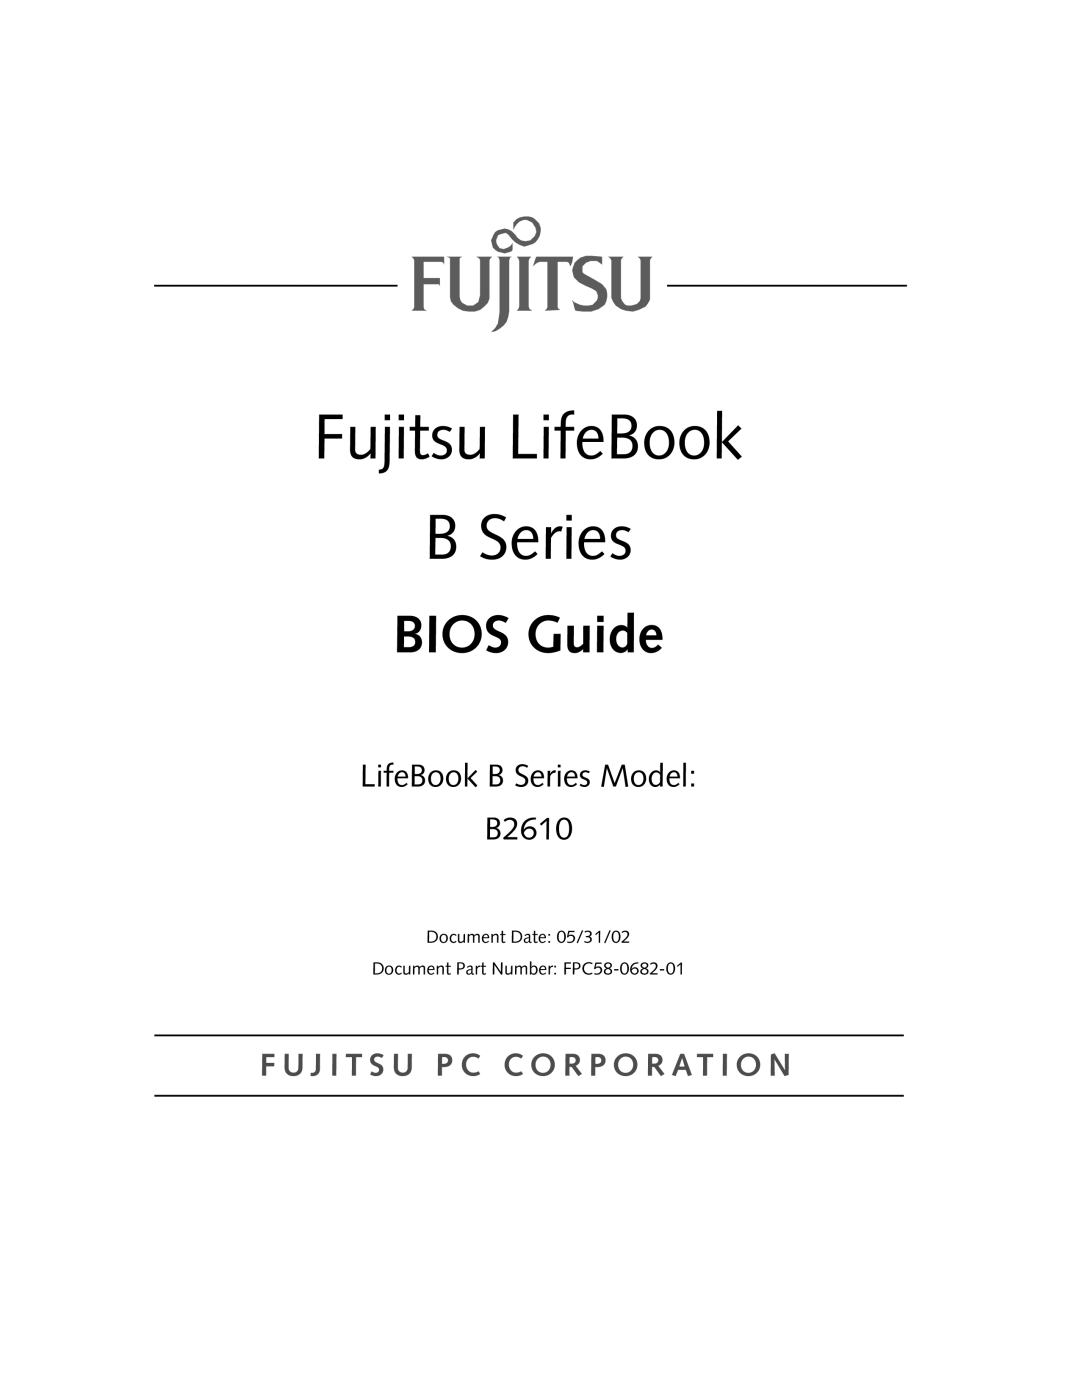 Fujitsu manual Fujitsu LifeBook, BIOS Guide, LifeBook B Series Model B2610, F U J I T S U P C C O R P O R At I O N 